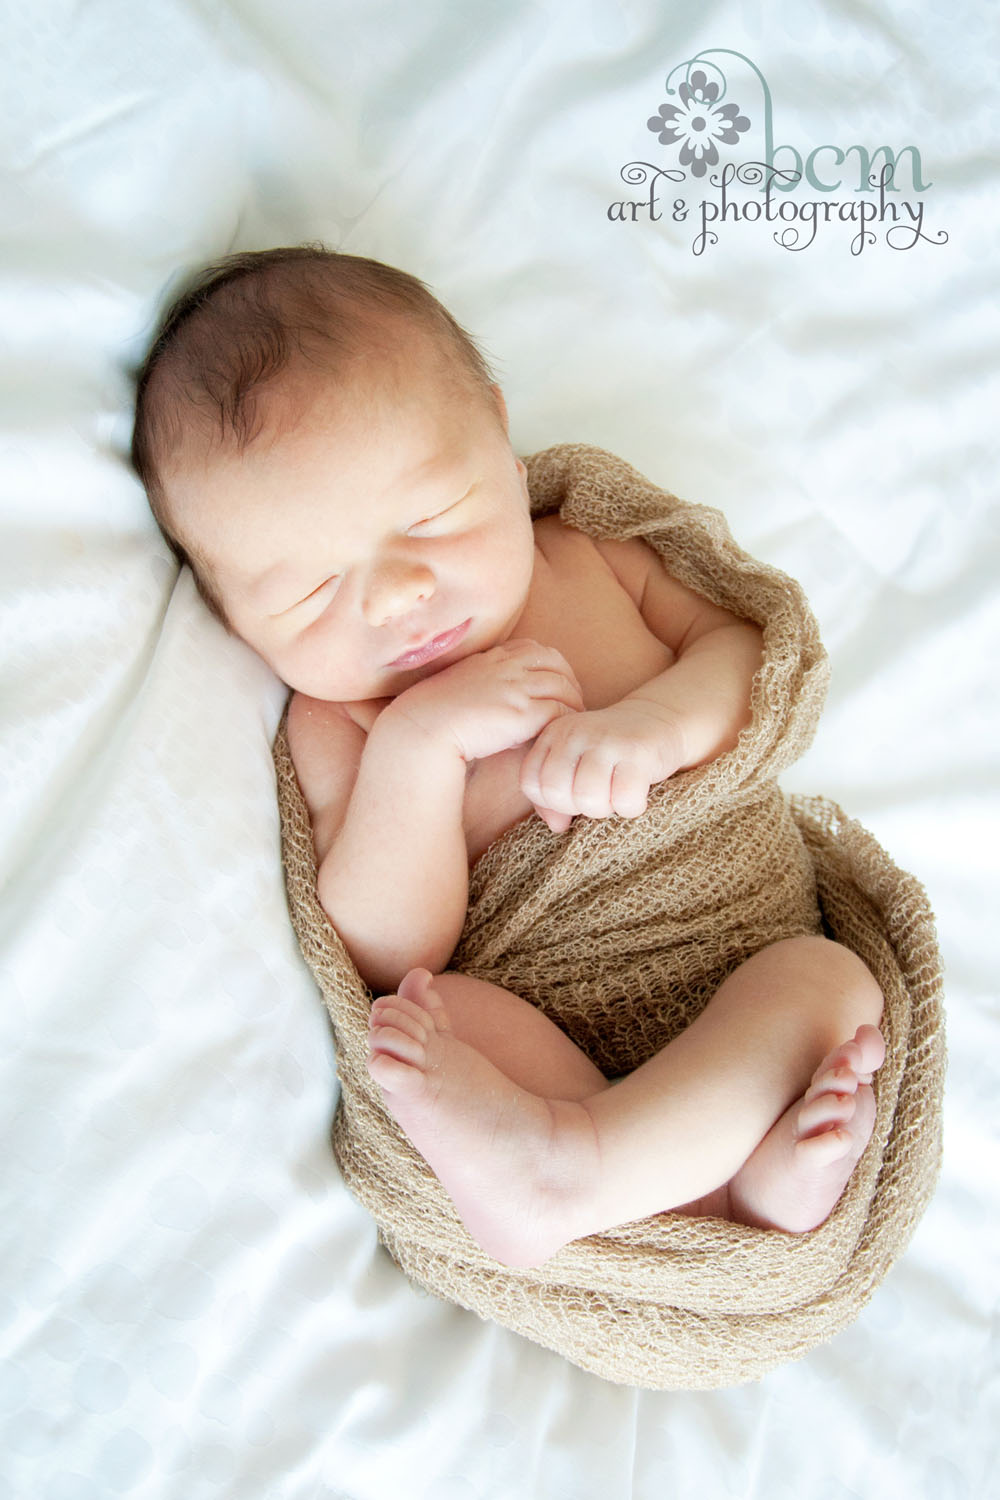 Newborn Portraits, bcm art & photography 2014